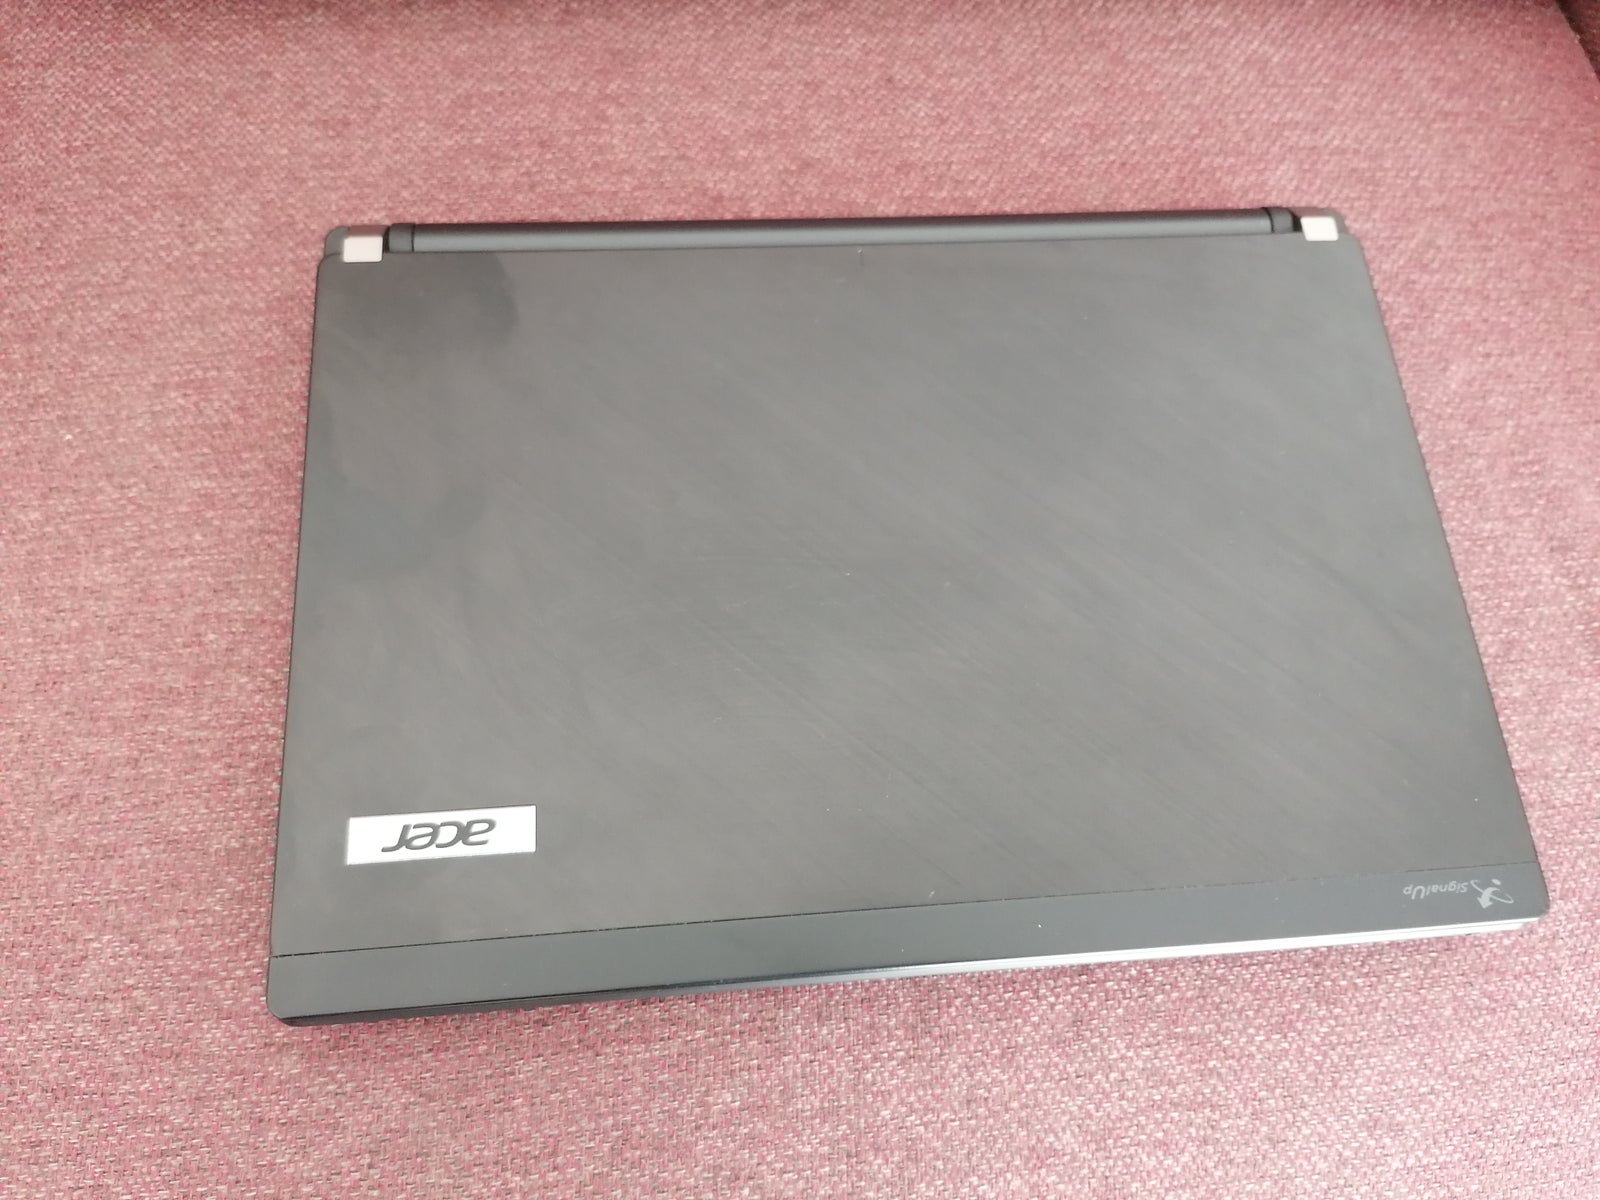 Acer, i5 GHz, 4 GB ram